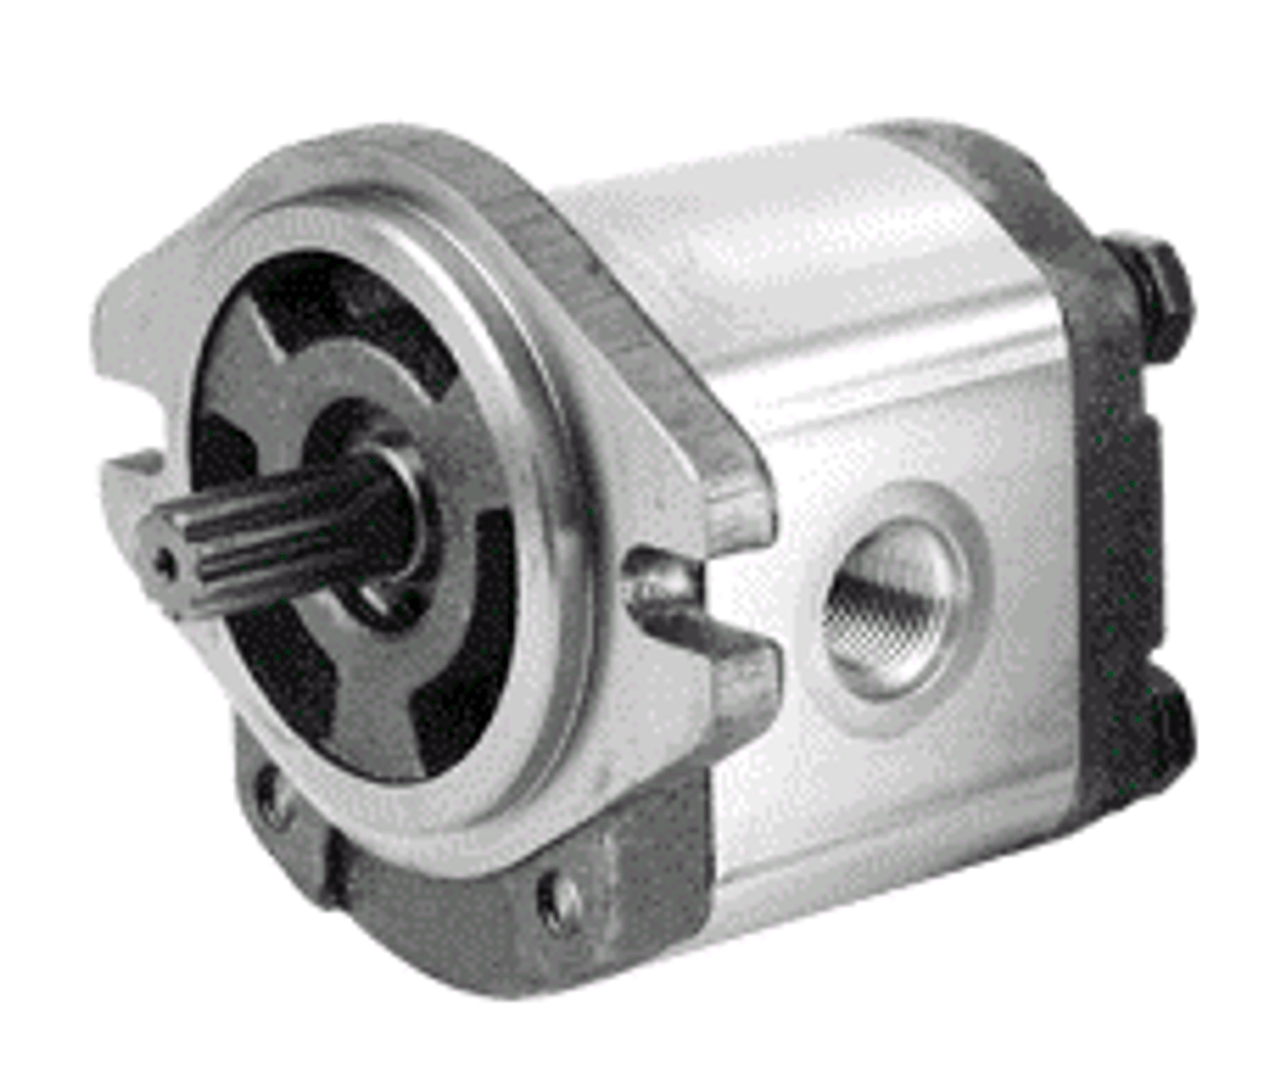 Honor Pumps 2GG2U26L Hydraulic gear pump 1.53 cubic inch displacement 9T splined shaft  Honor Pumps USA